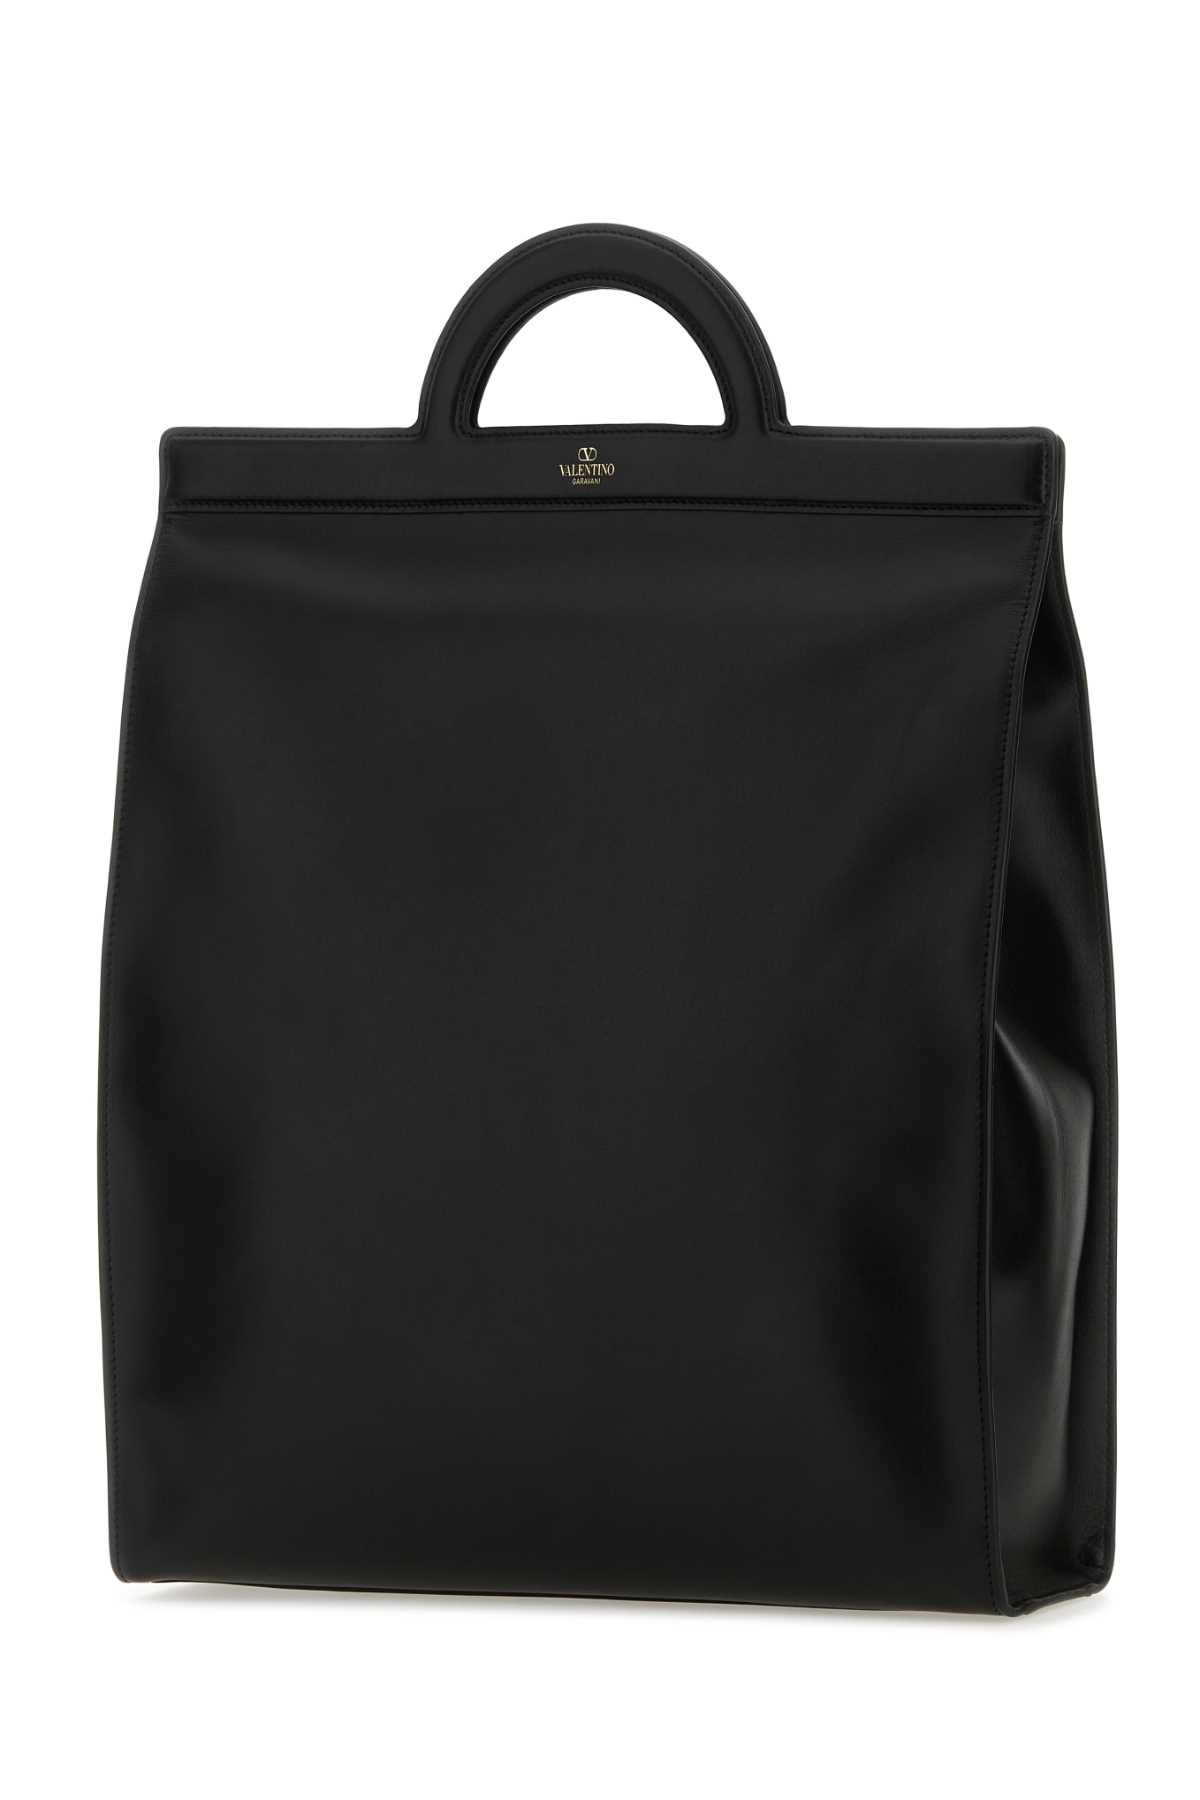 Valentino Garavani Black Leather Shopping Bag In Nero